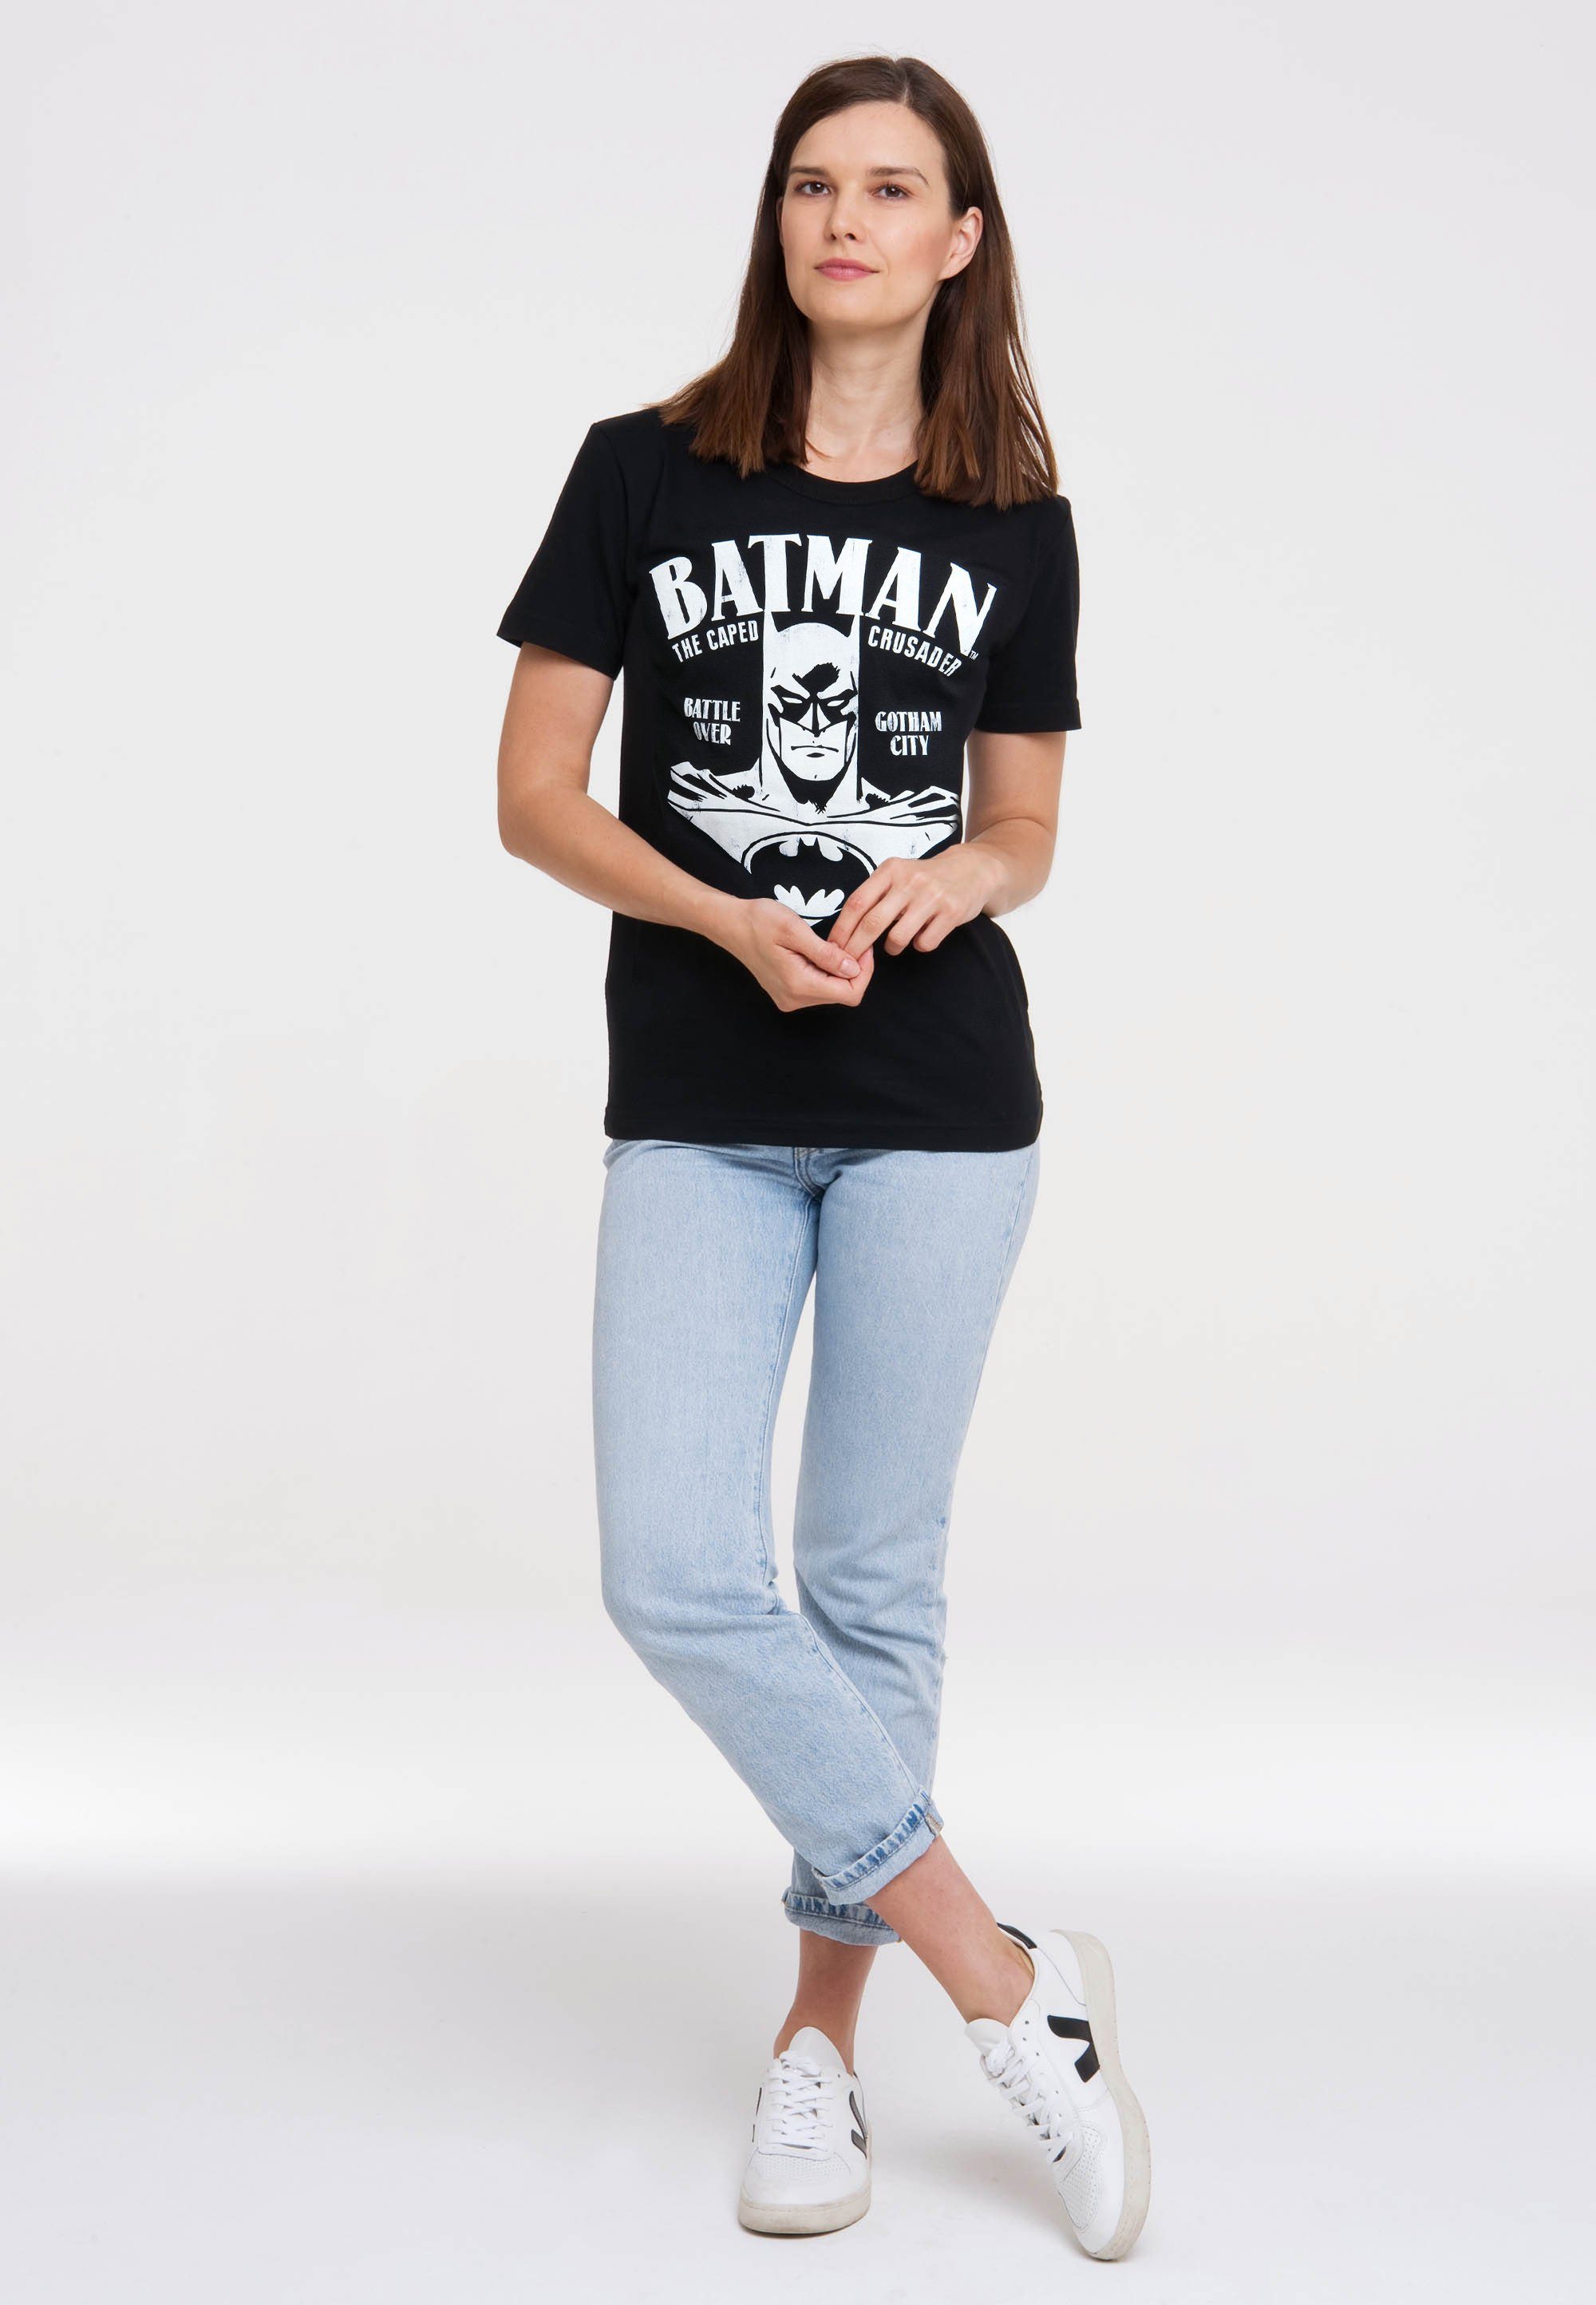 LOGOSHIRT Superhelden Print mit Batman T-Shirt - Portrait